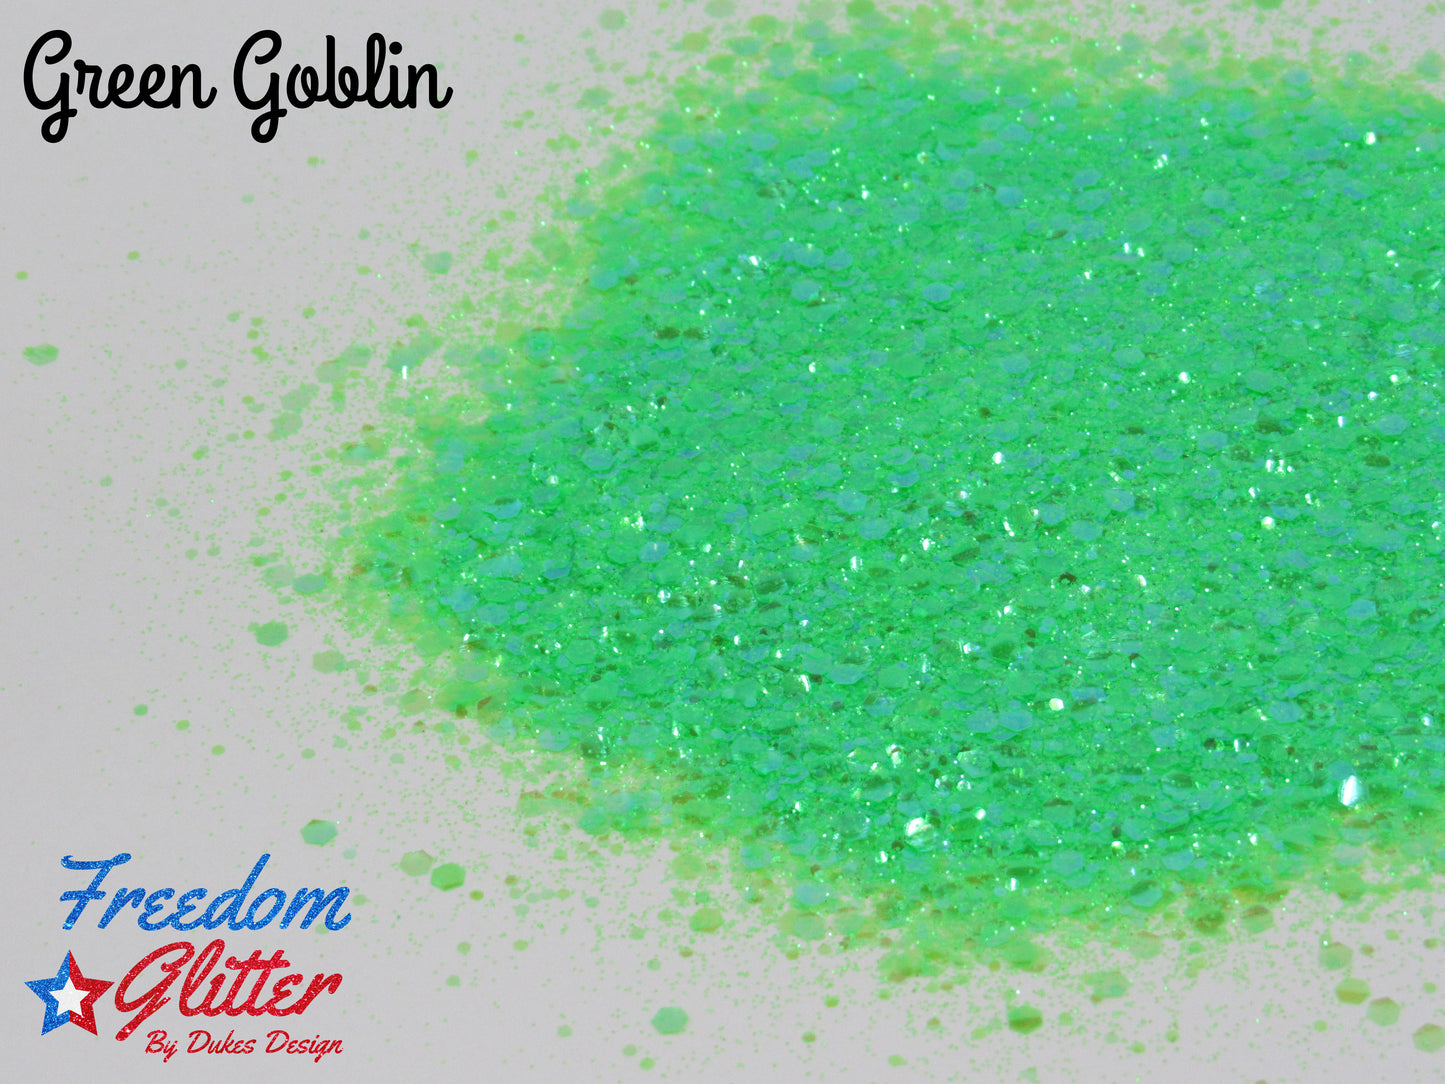 Green Goblin (Iridescent Glitter)